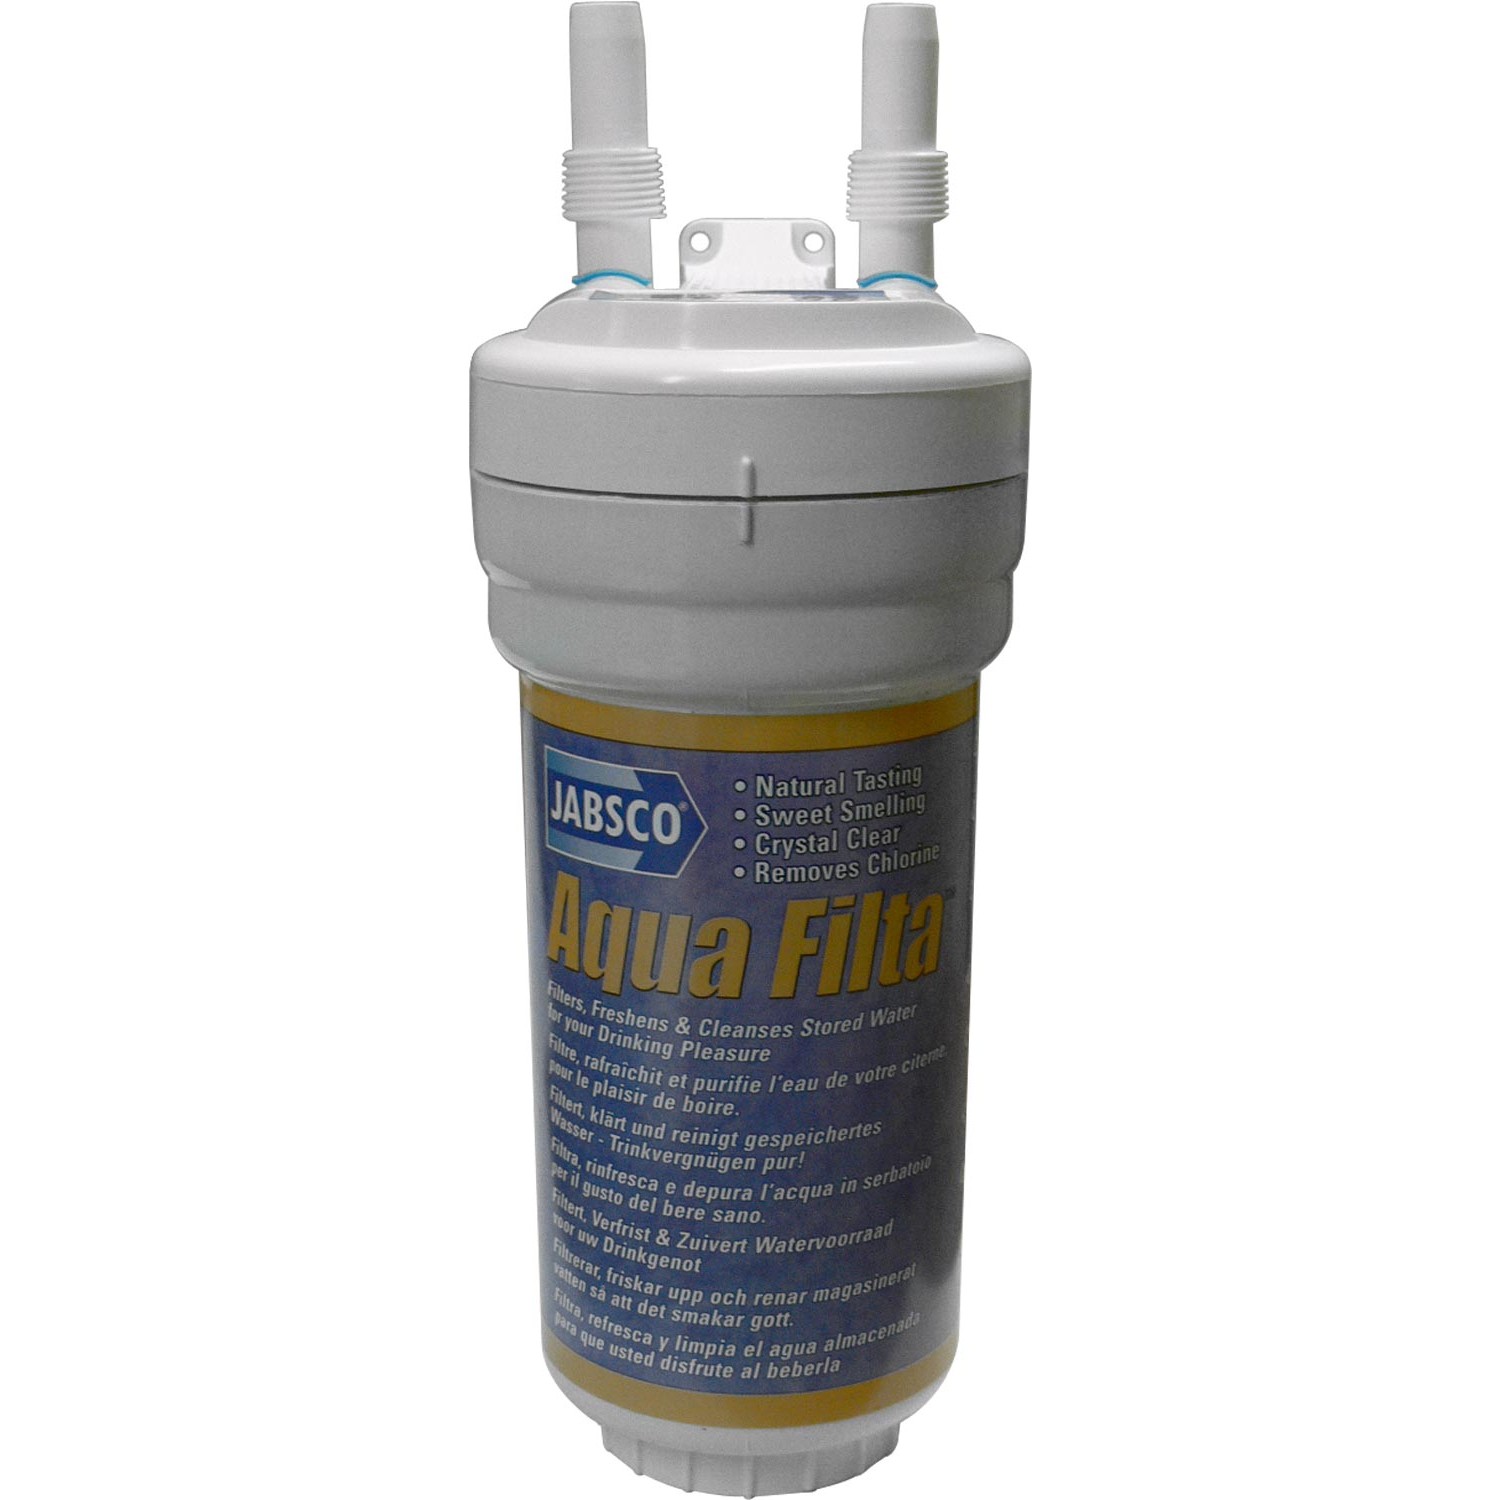 Jabsco Aqua Filta Water Filter Complete Unit 59000-1000 